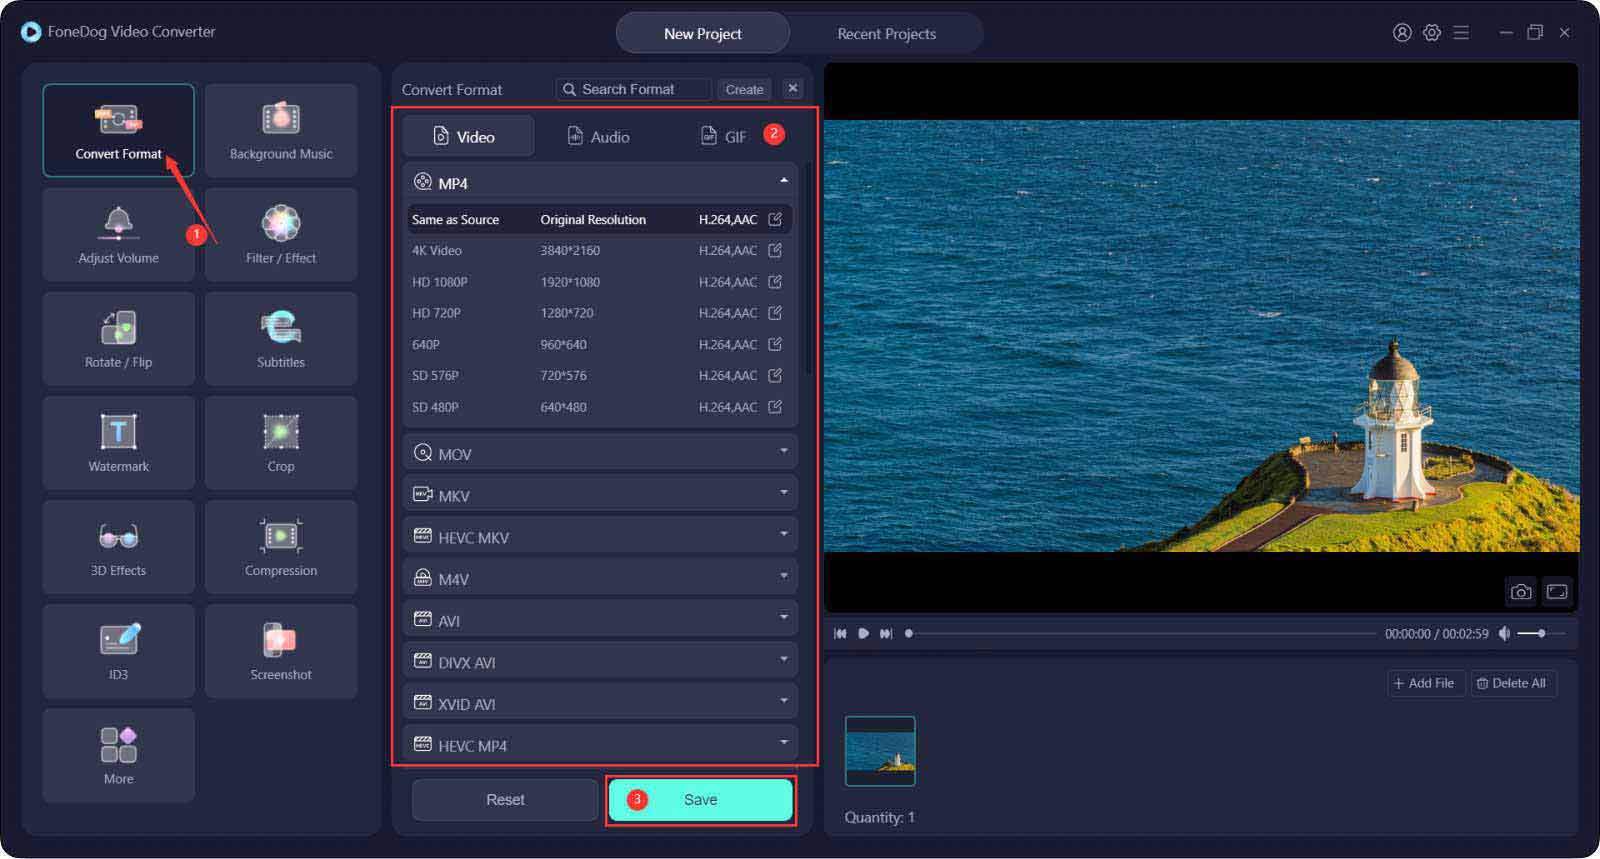 Convierta video a Flash usando FoneDog Video Converter